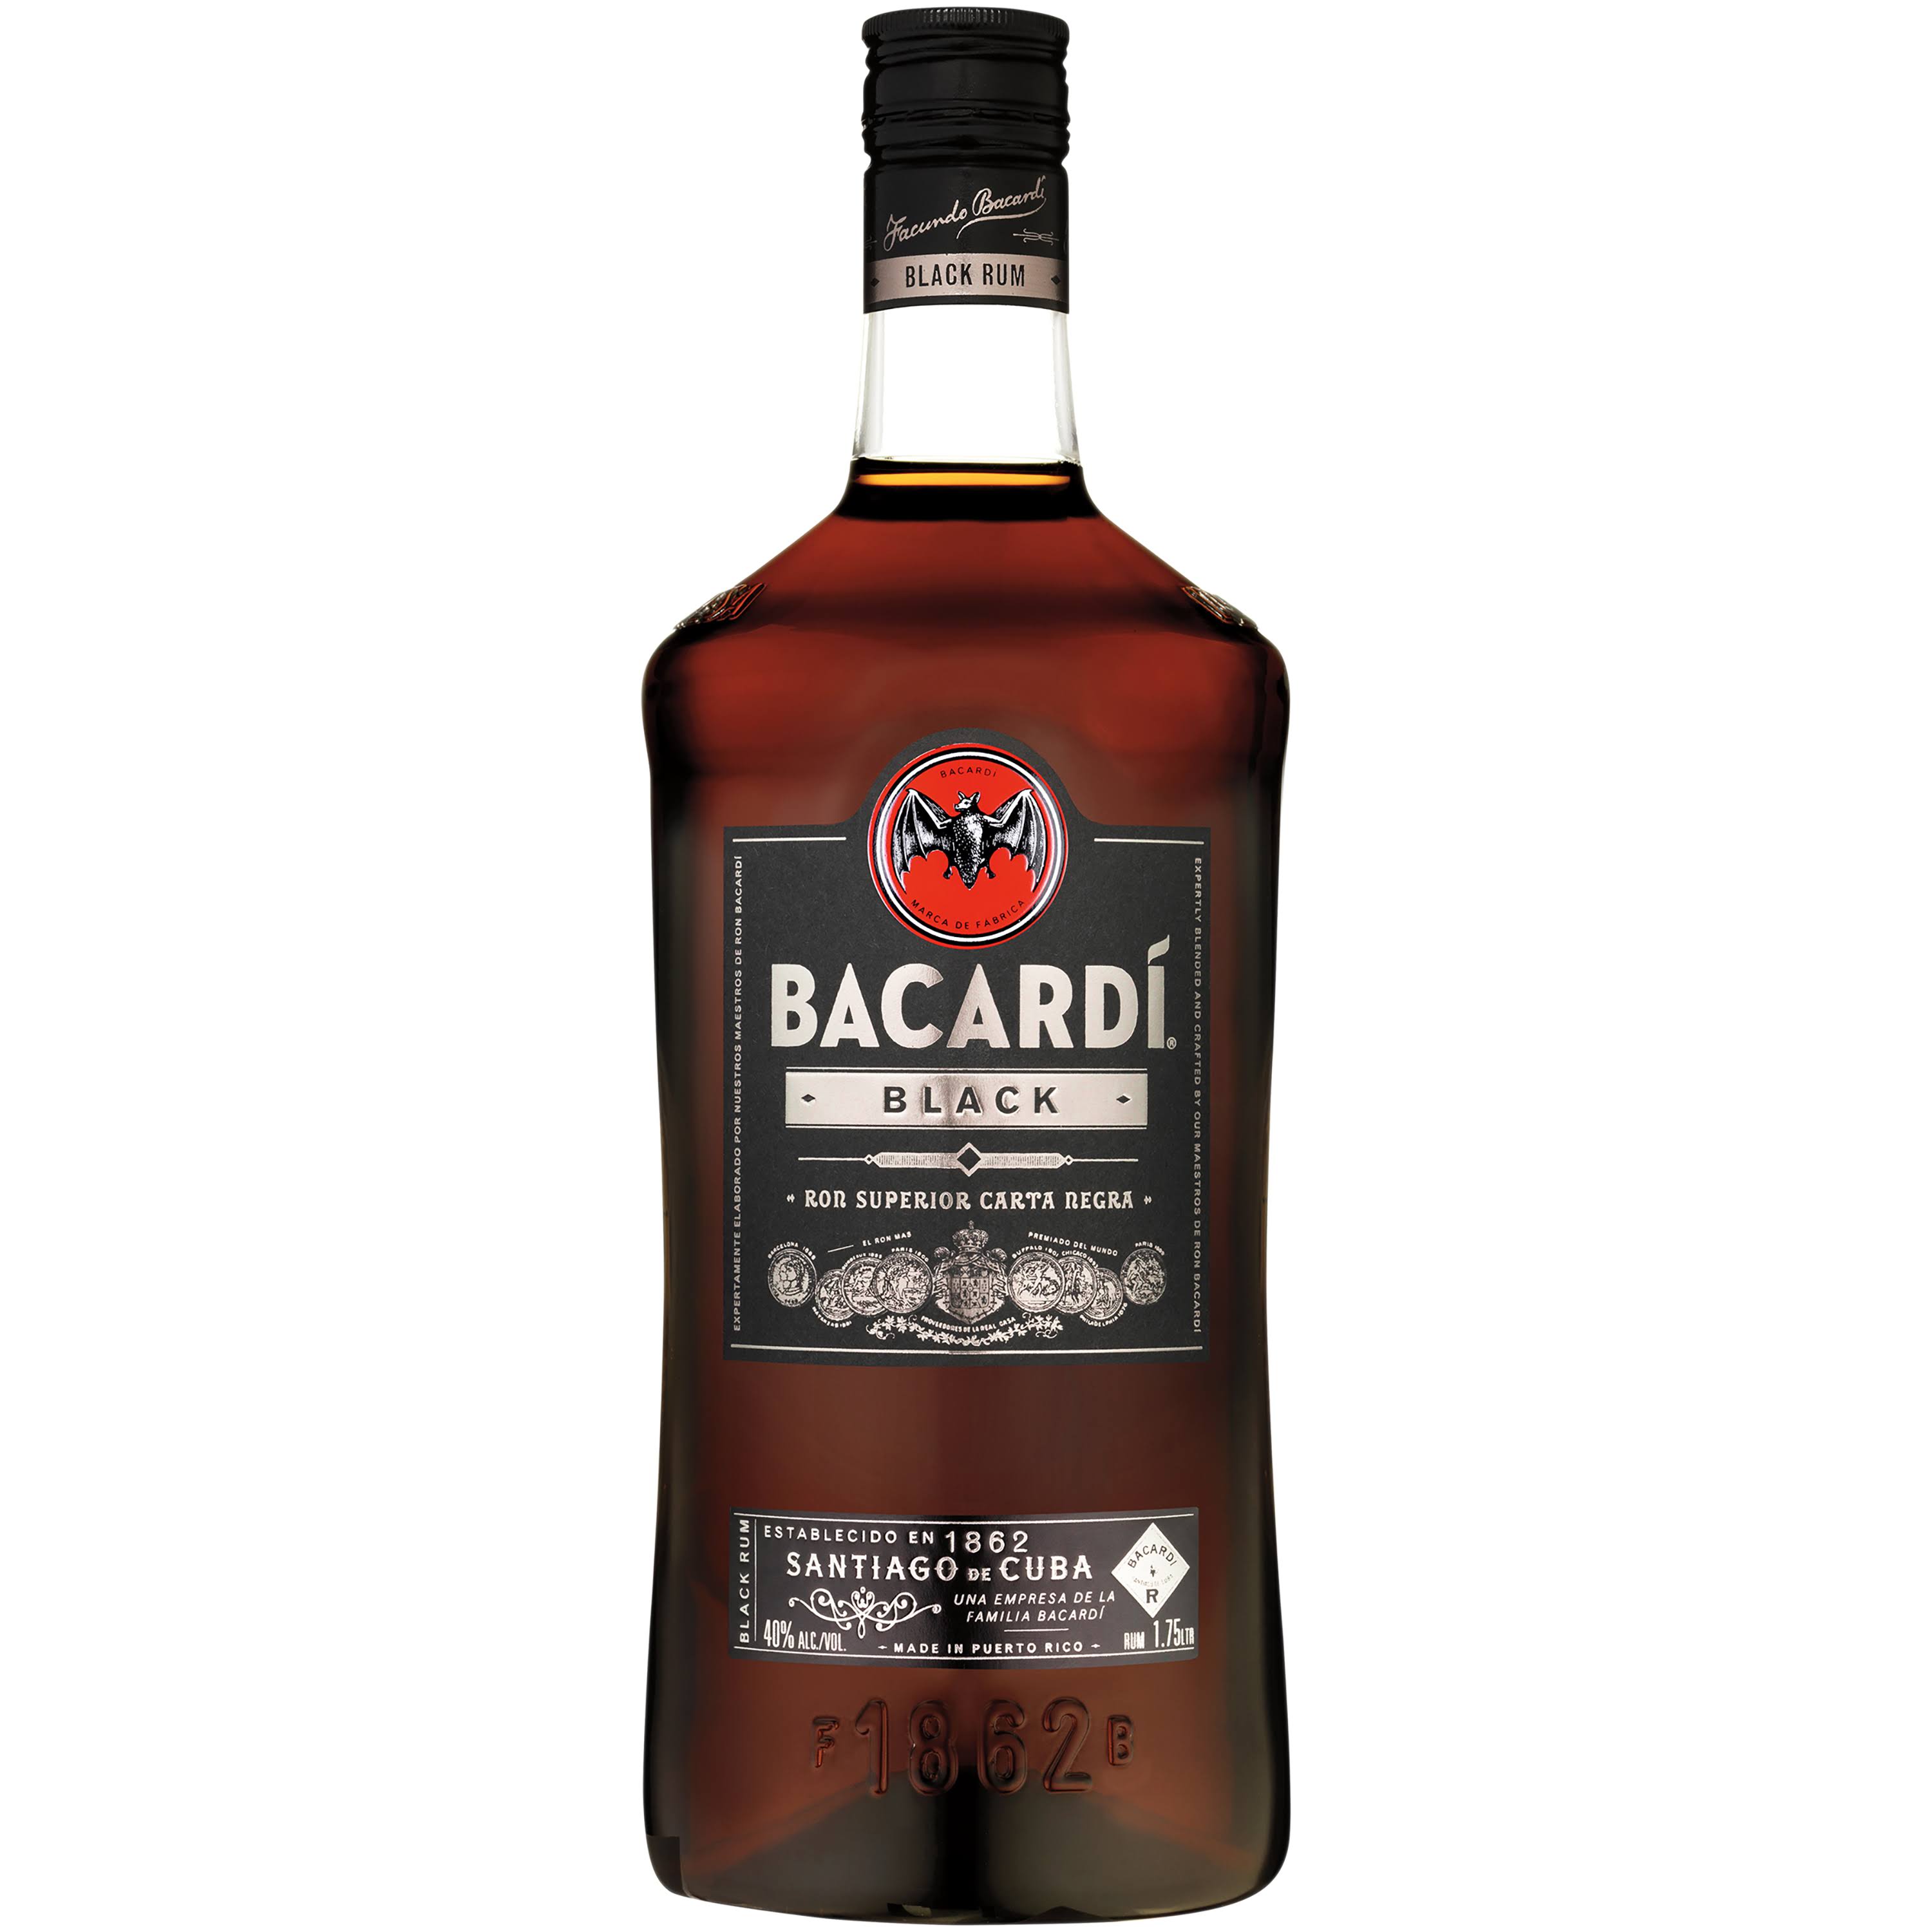 Bacardi Black Rum - 1.75 L bottle